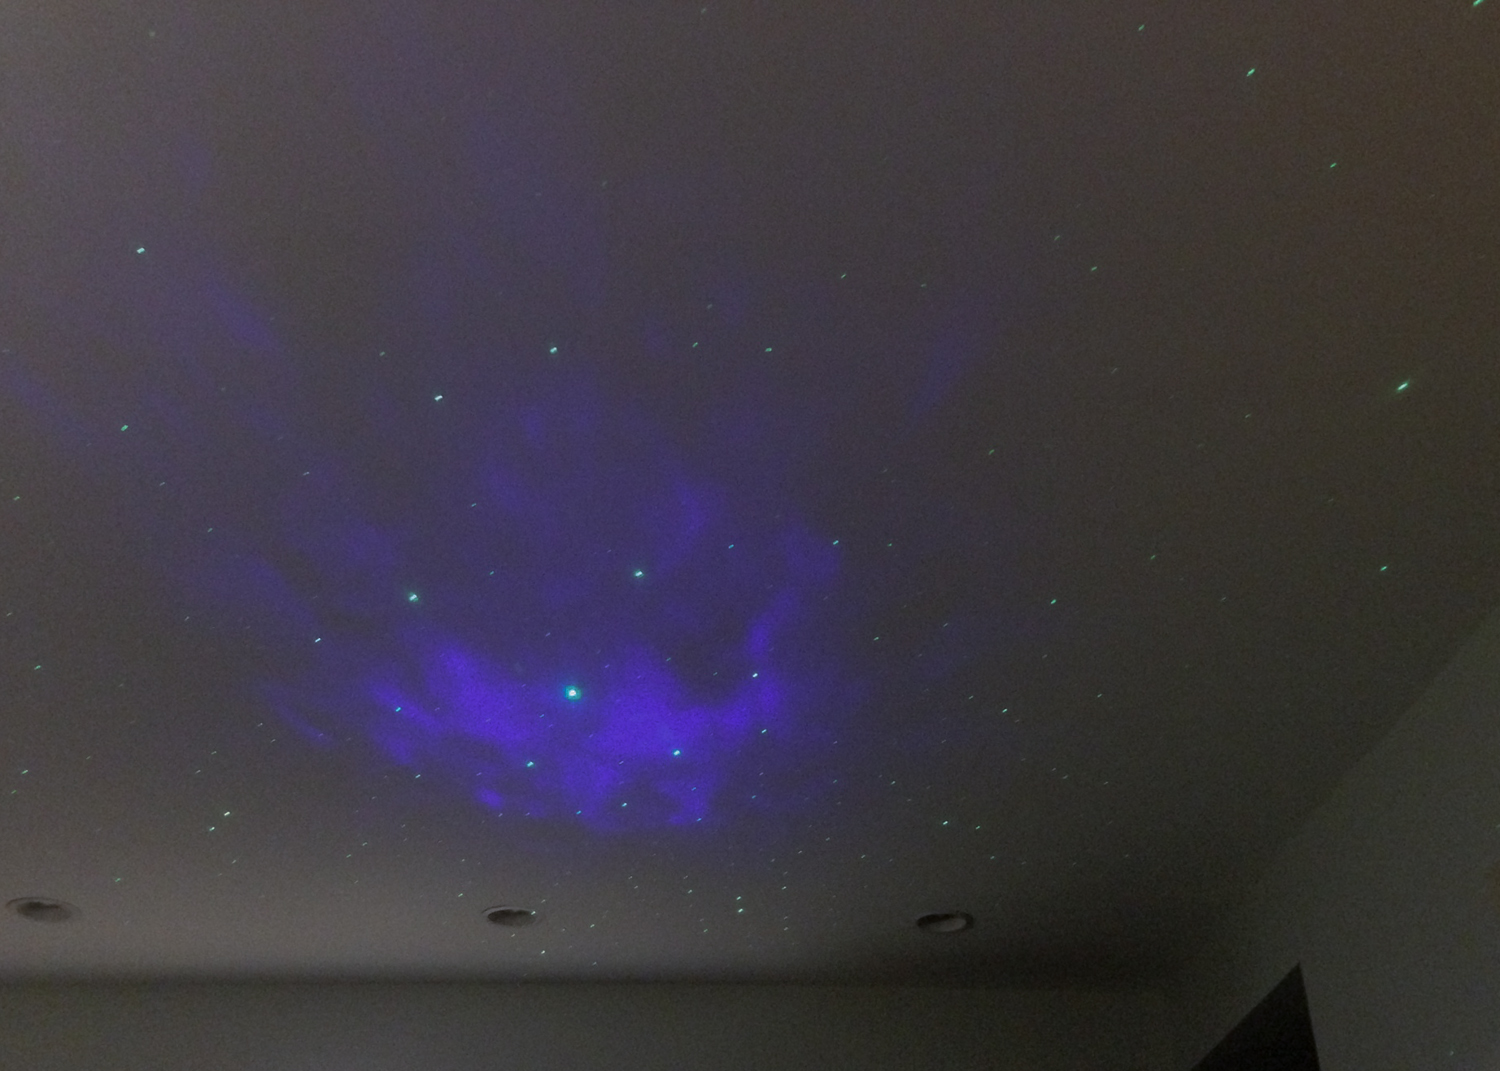 The Cloud of Eta Carinae